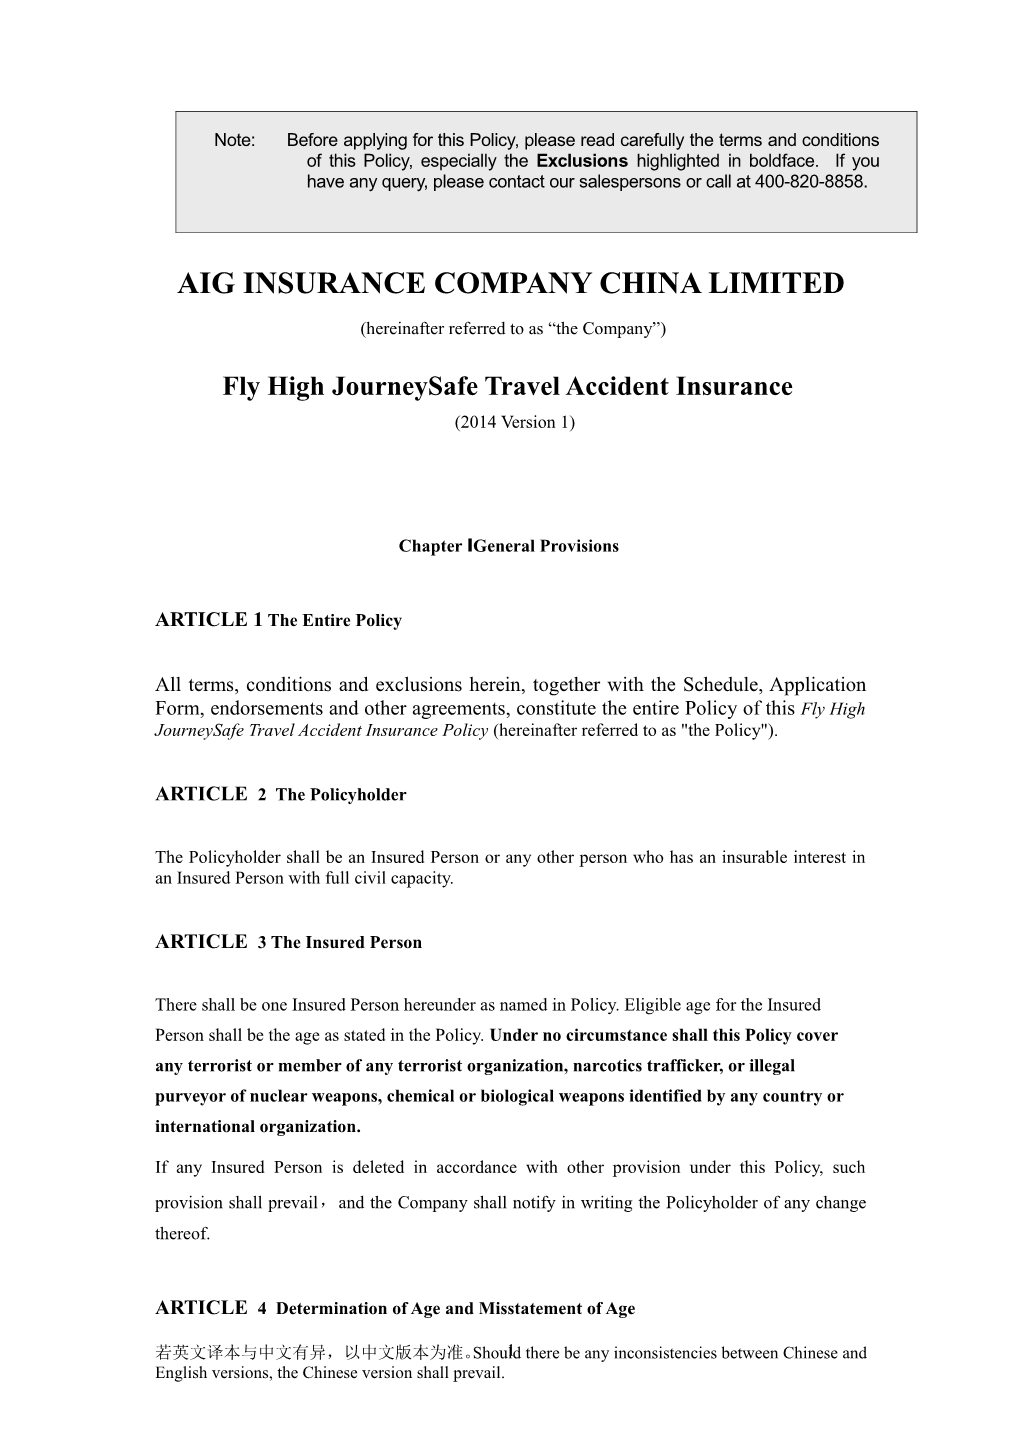 AIG Insurance Company China Limited